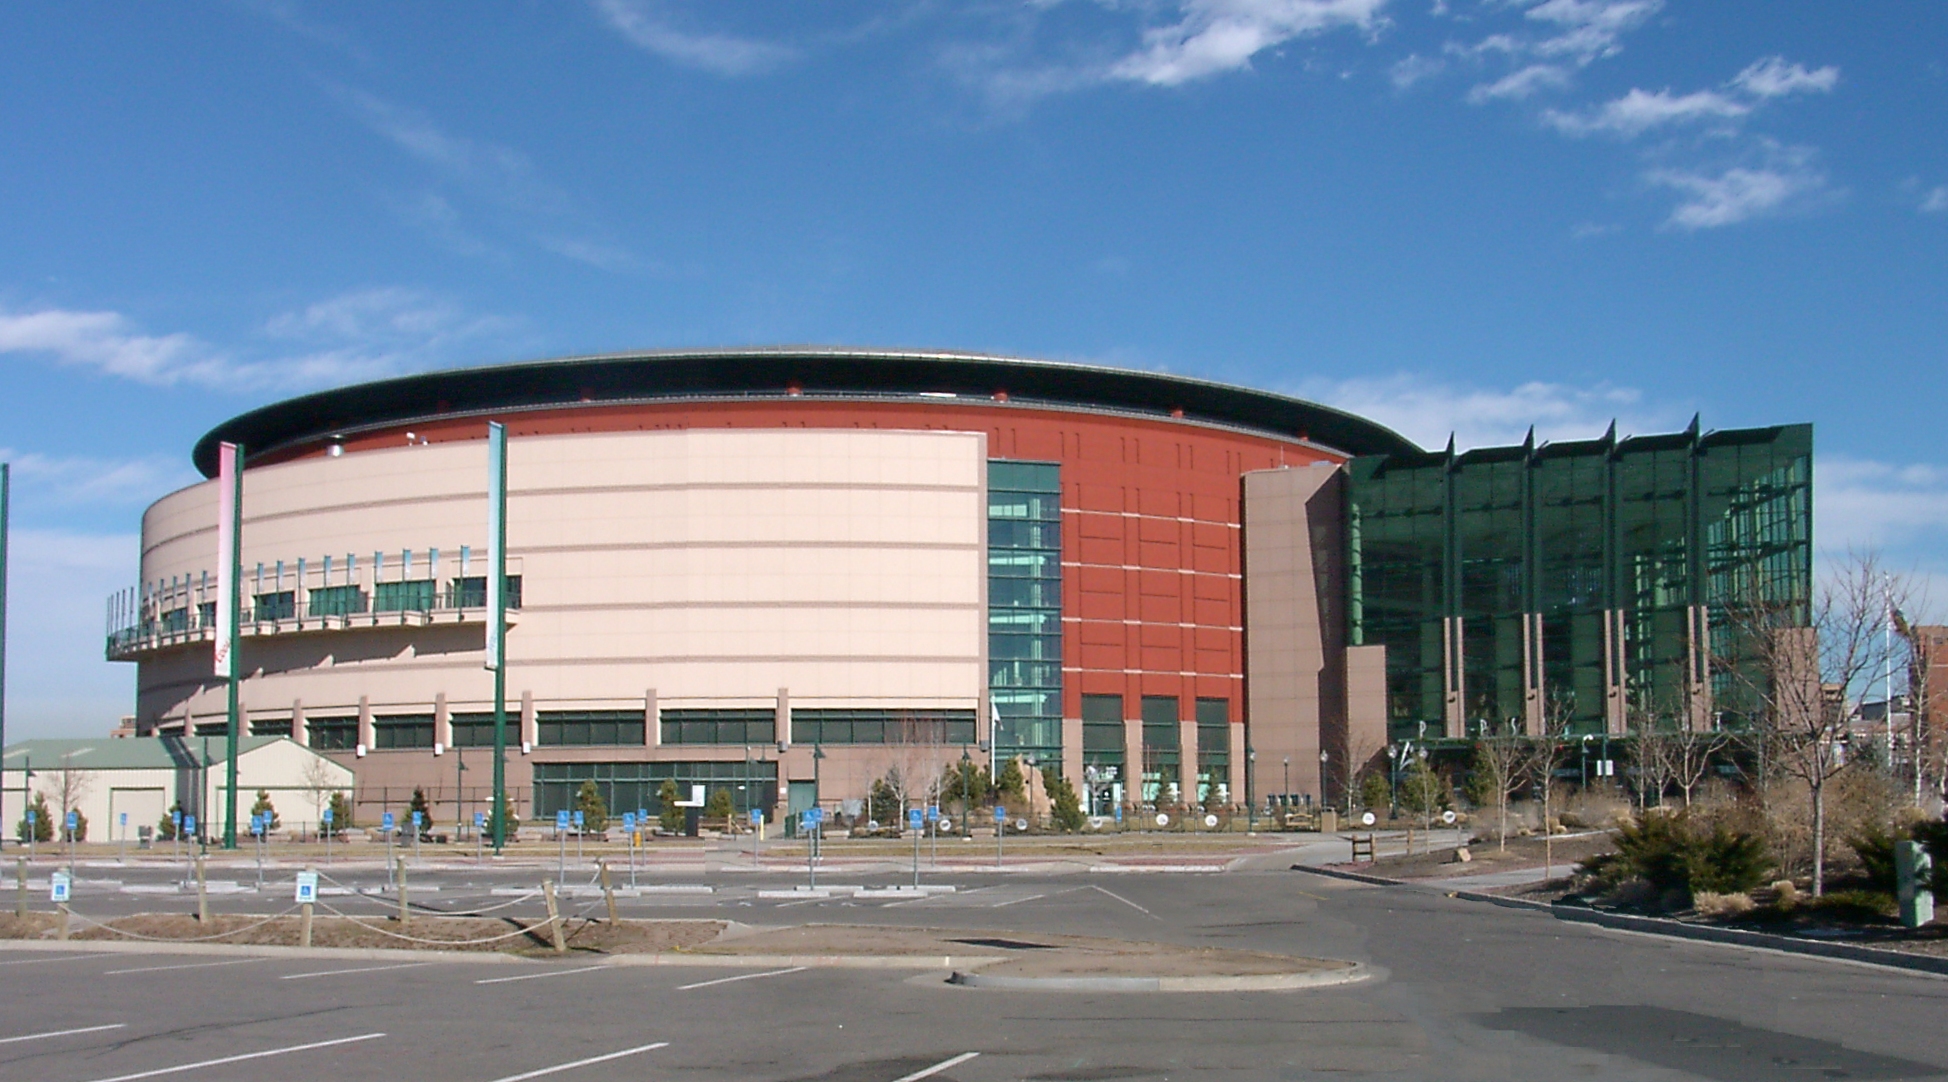 Pepsi Center, home of the Colorado Avalanche